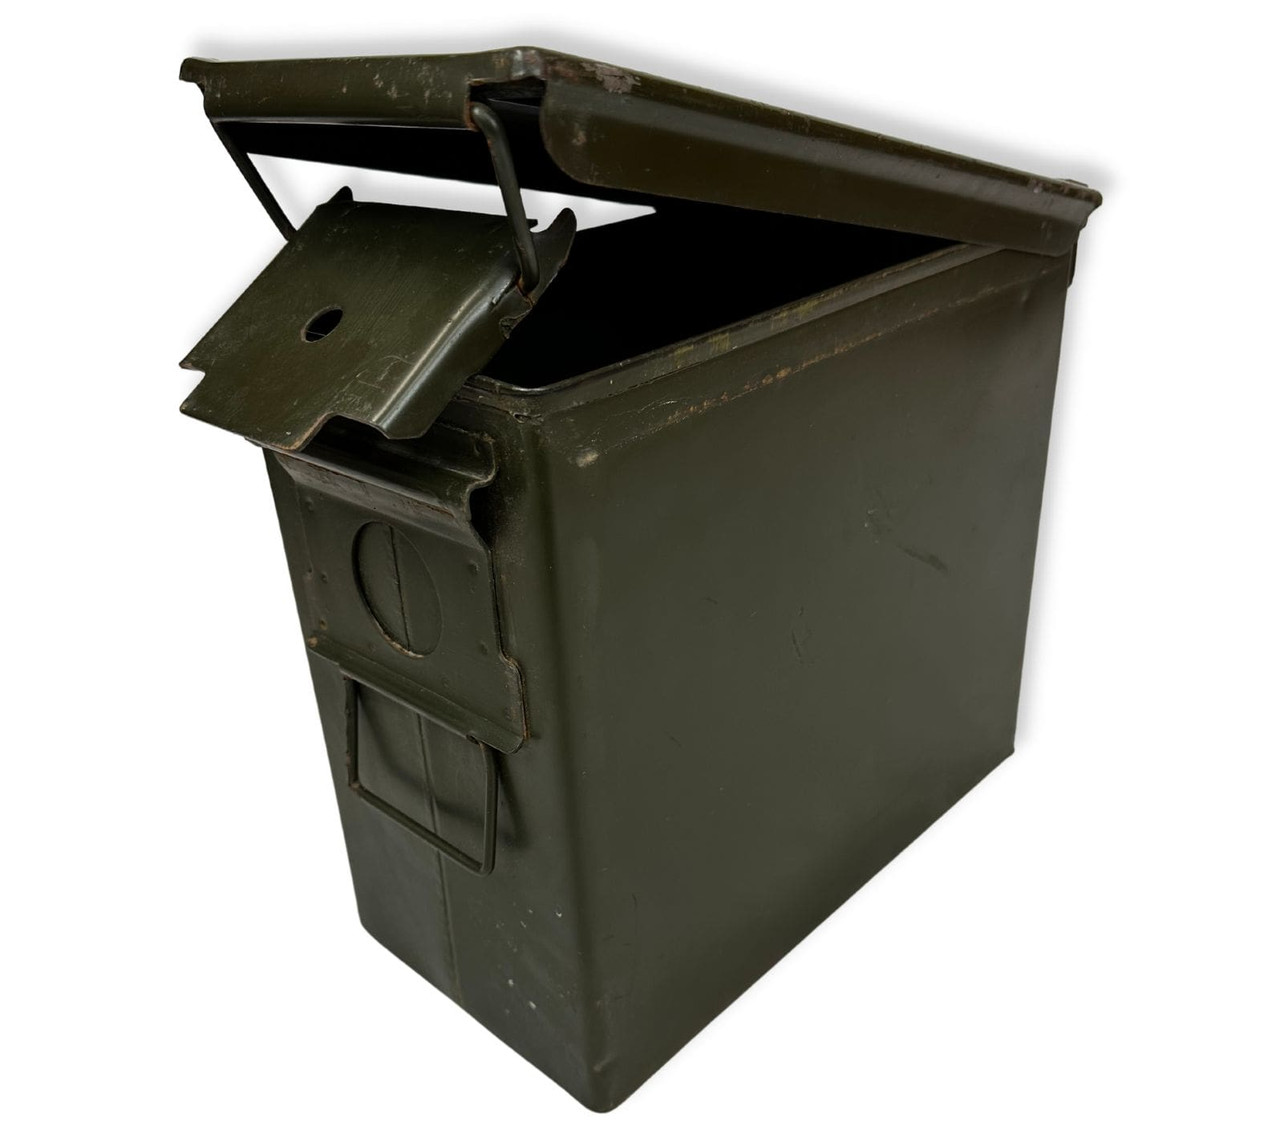 Plastic 50 Caliber Ammo Can - Olive Drab - Army Barracks